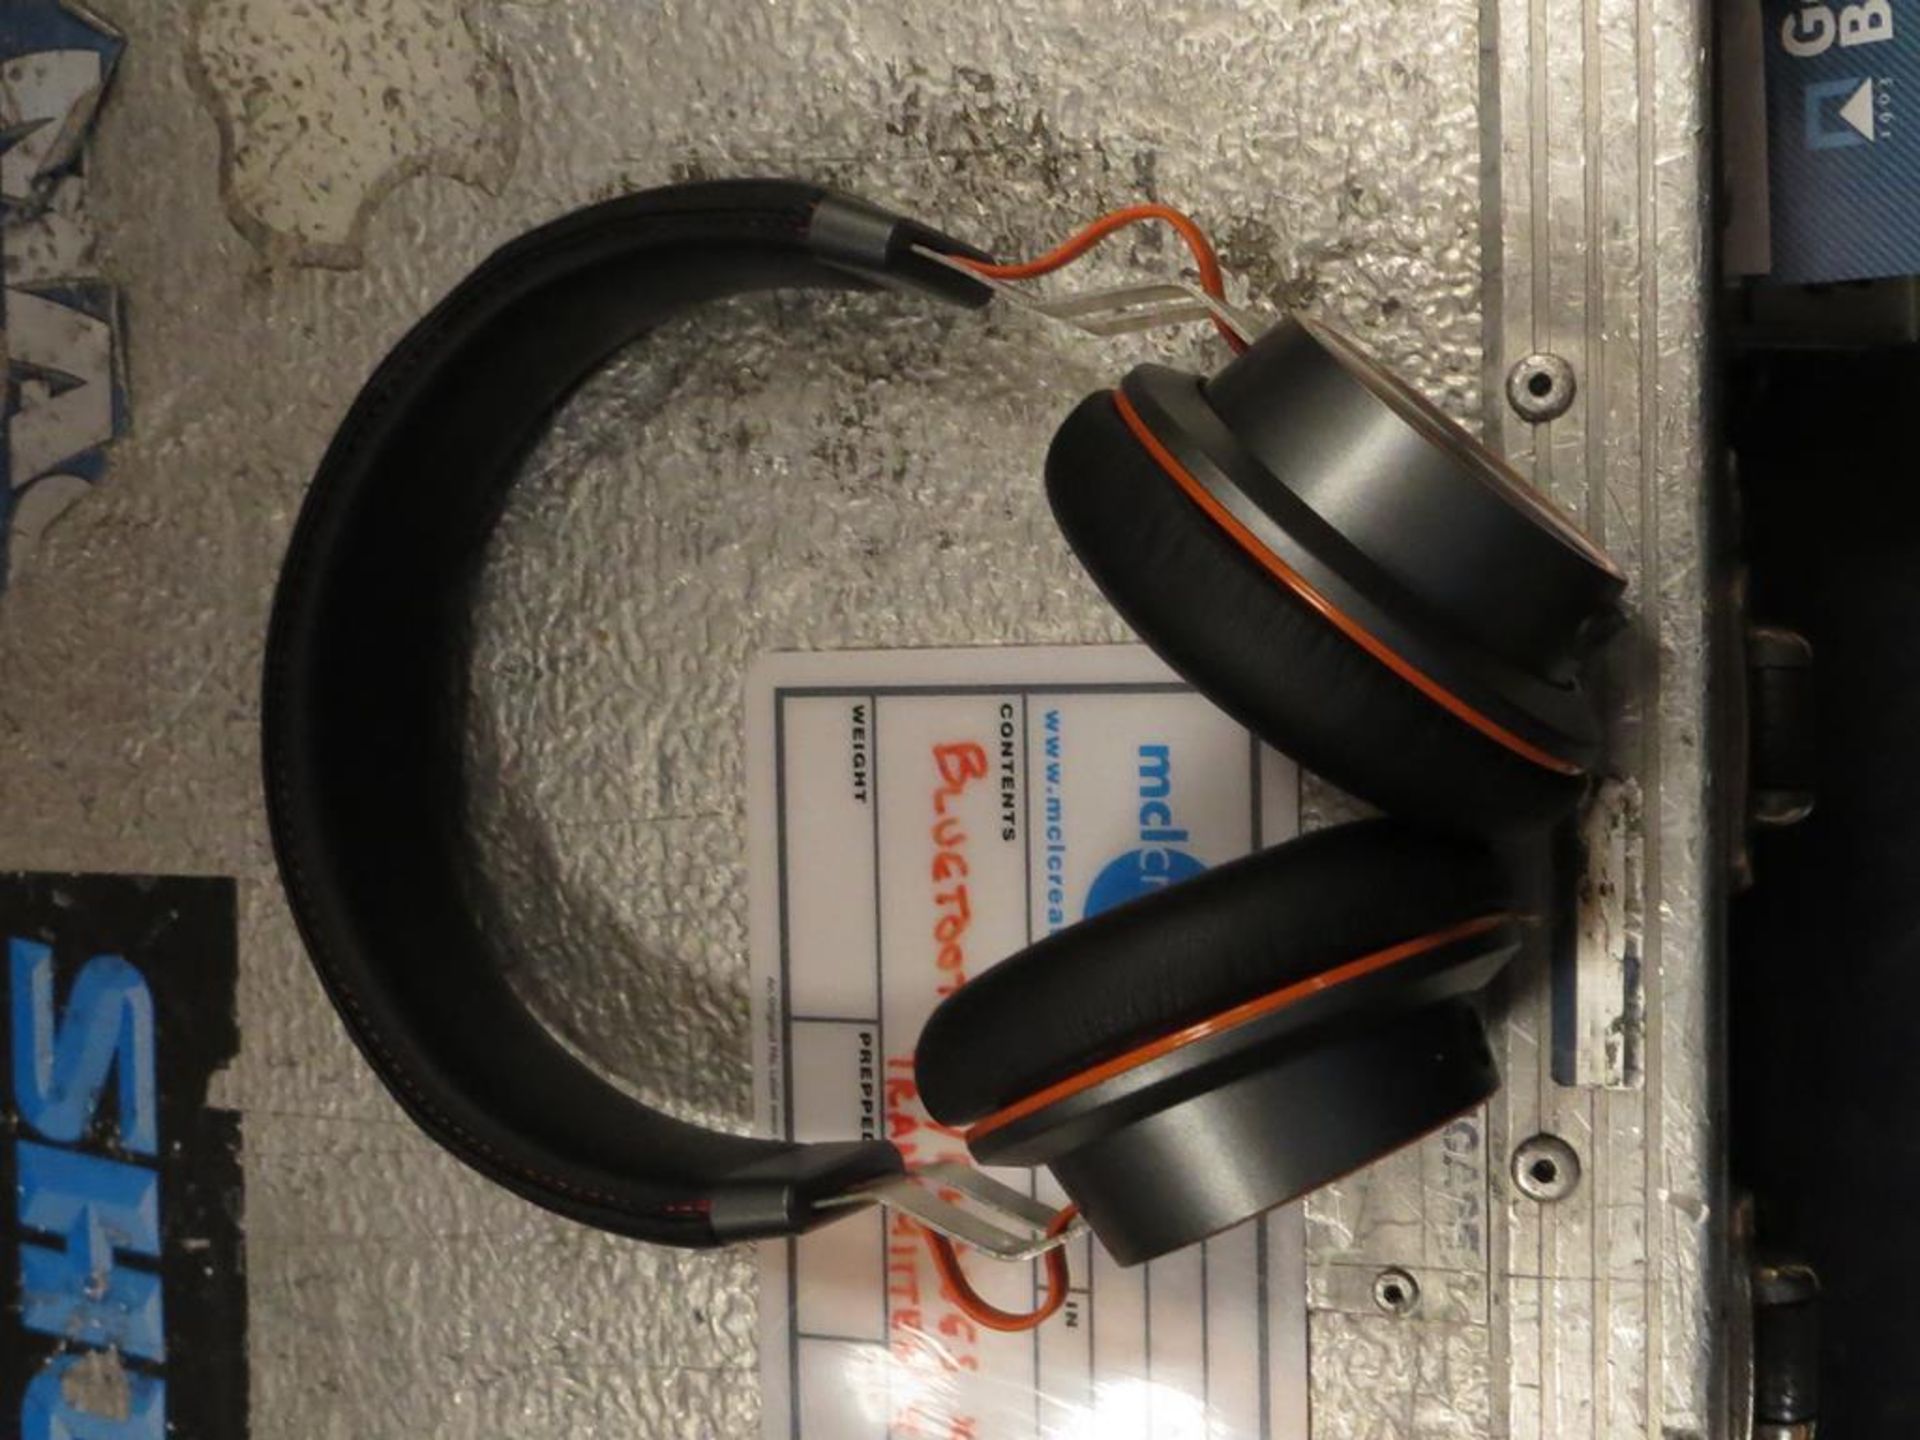 2x No. Betron, Bluetooth headphones, 2x No. Philips, Bluetooth headphones with Bluetooth - Image 3 of 4